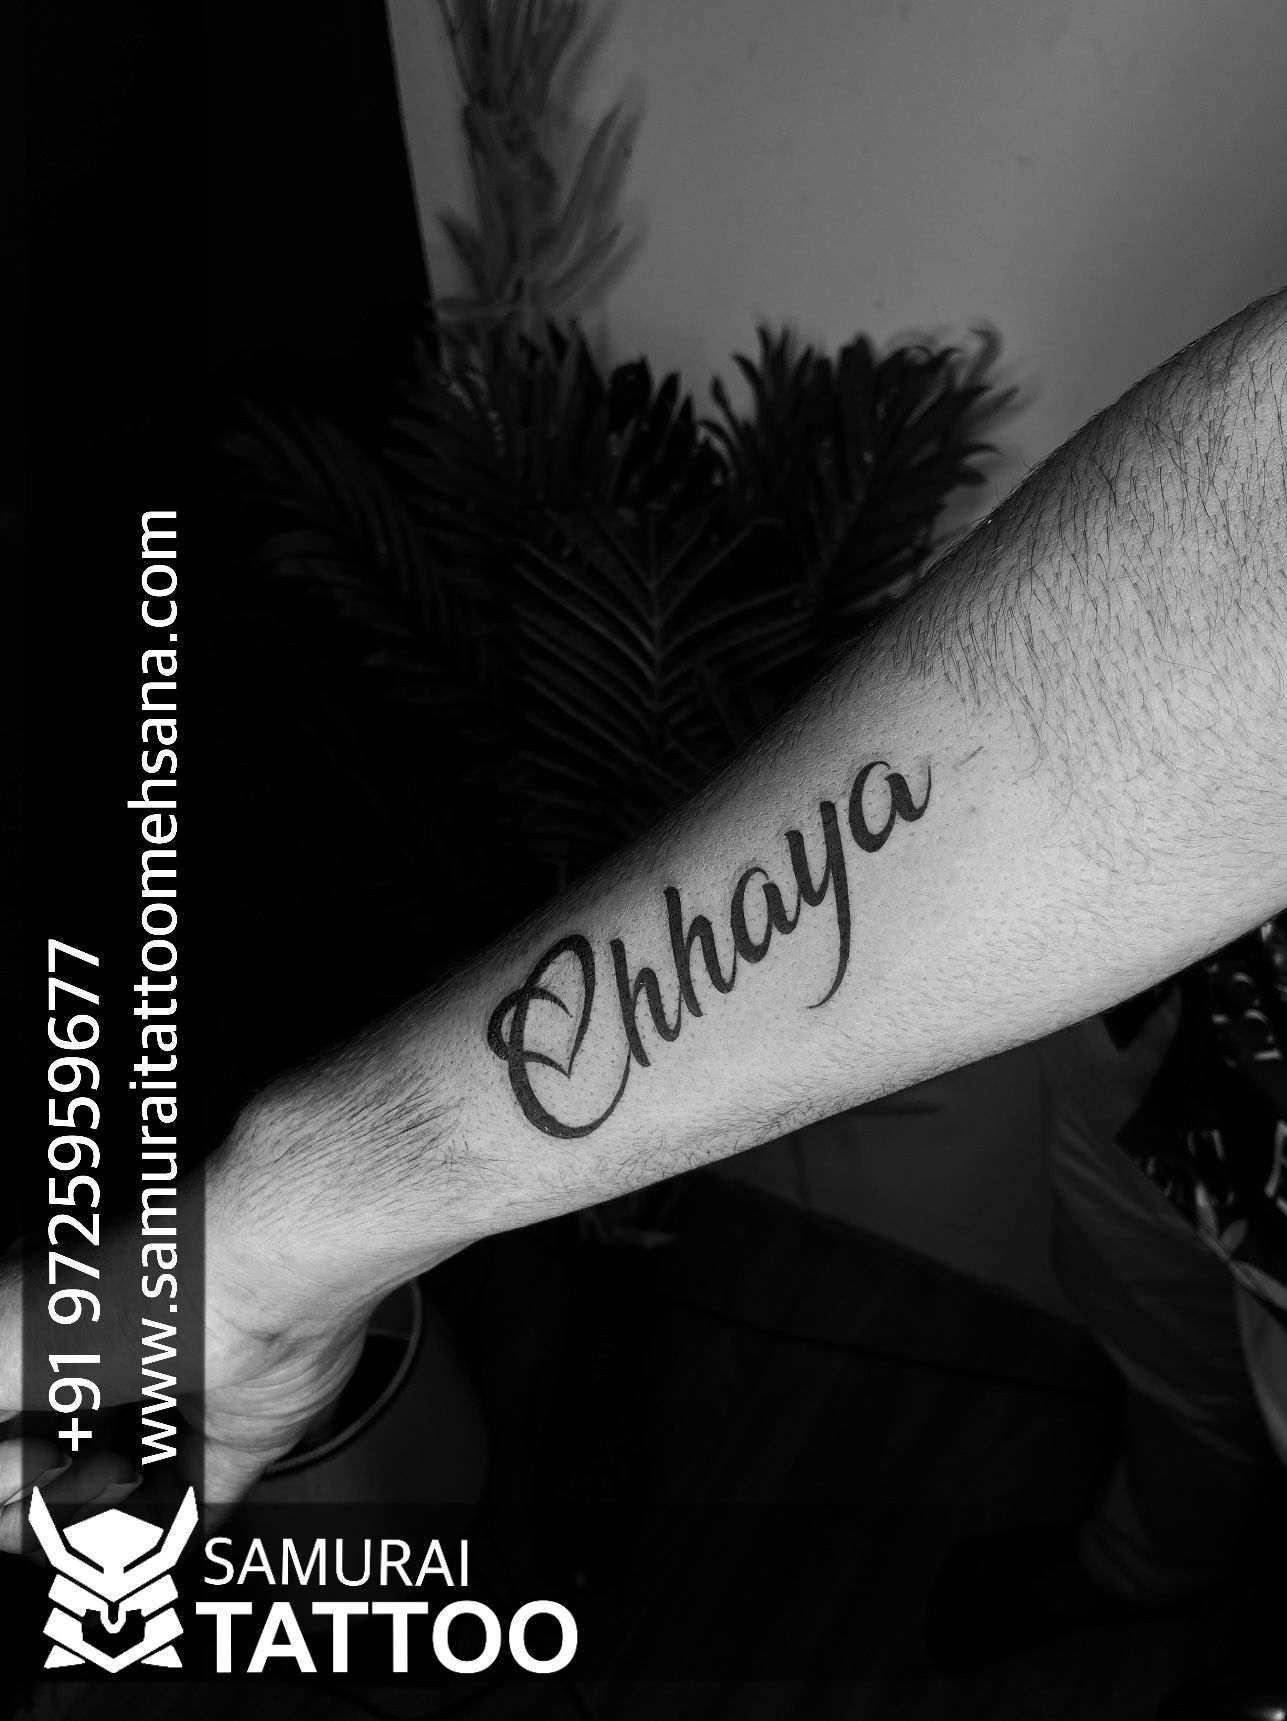 Tattoo uploaded by Vipul Chaudhary • Kaushal name tattoo |Kaushal name  tattoo ideas |Kaushal tattoo |Kaushal name tattoo design • Tattoodo